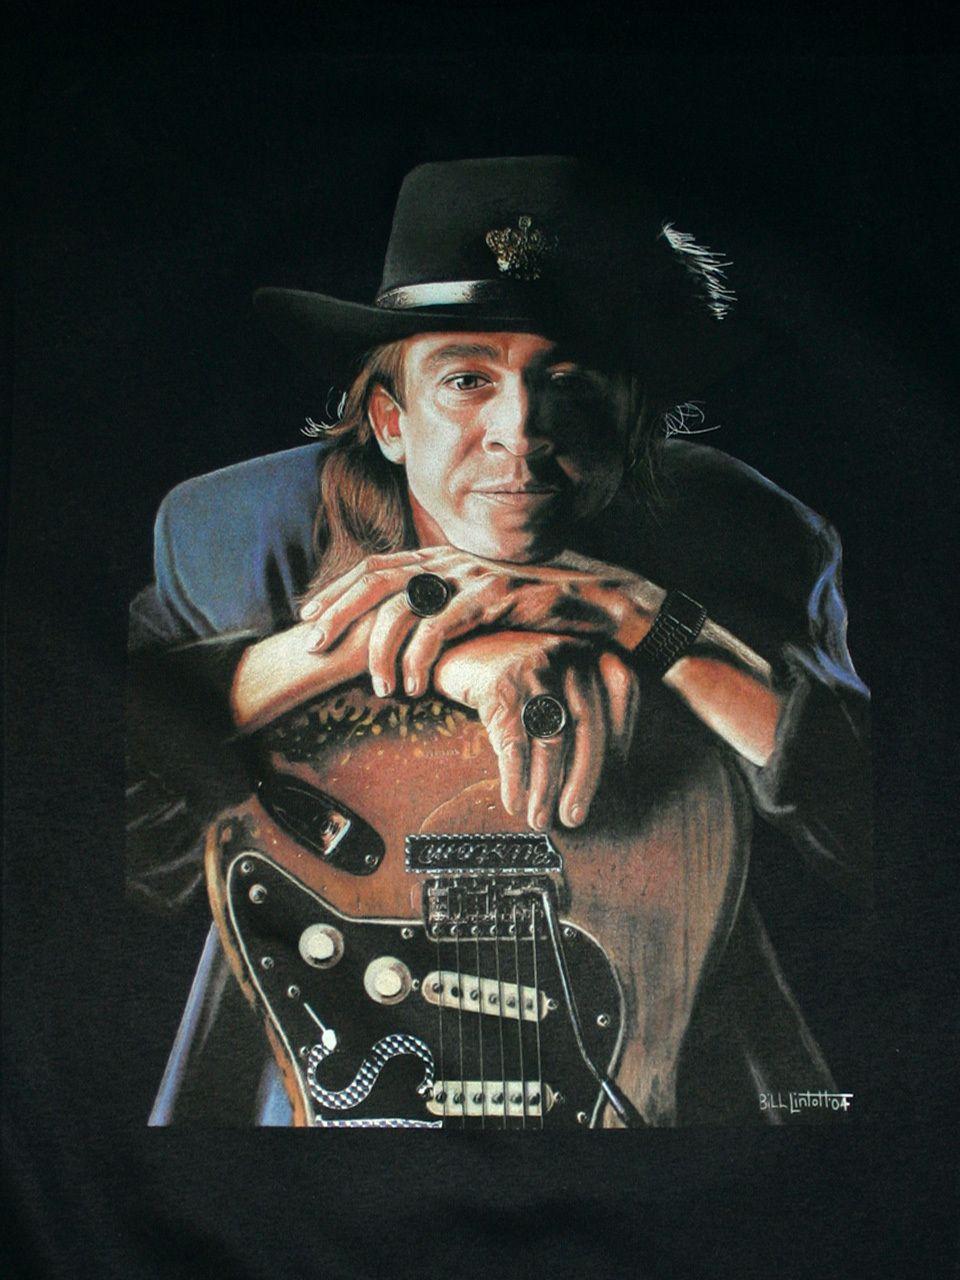 Stevie Ray Vaughan image SRV painting by Bill Lintott HD wallpaper